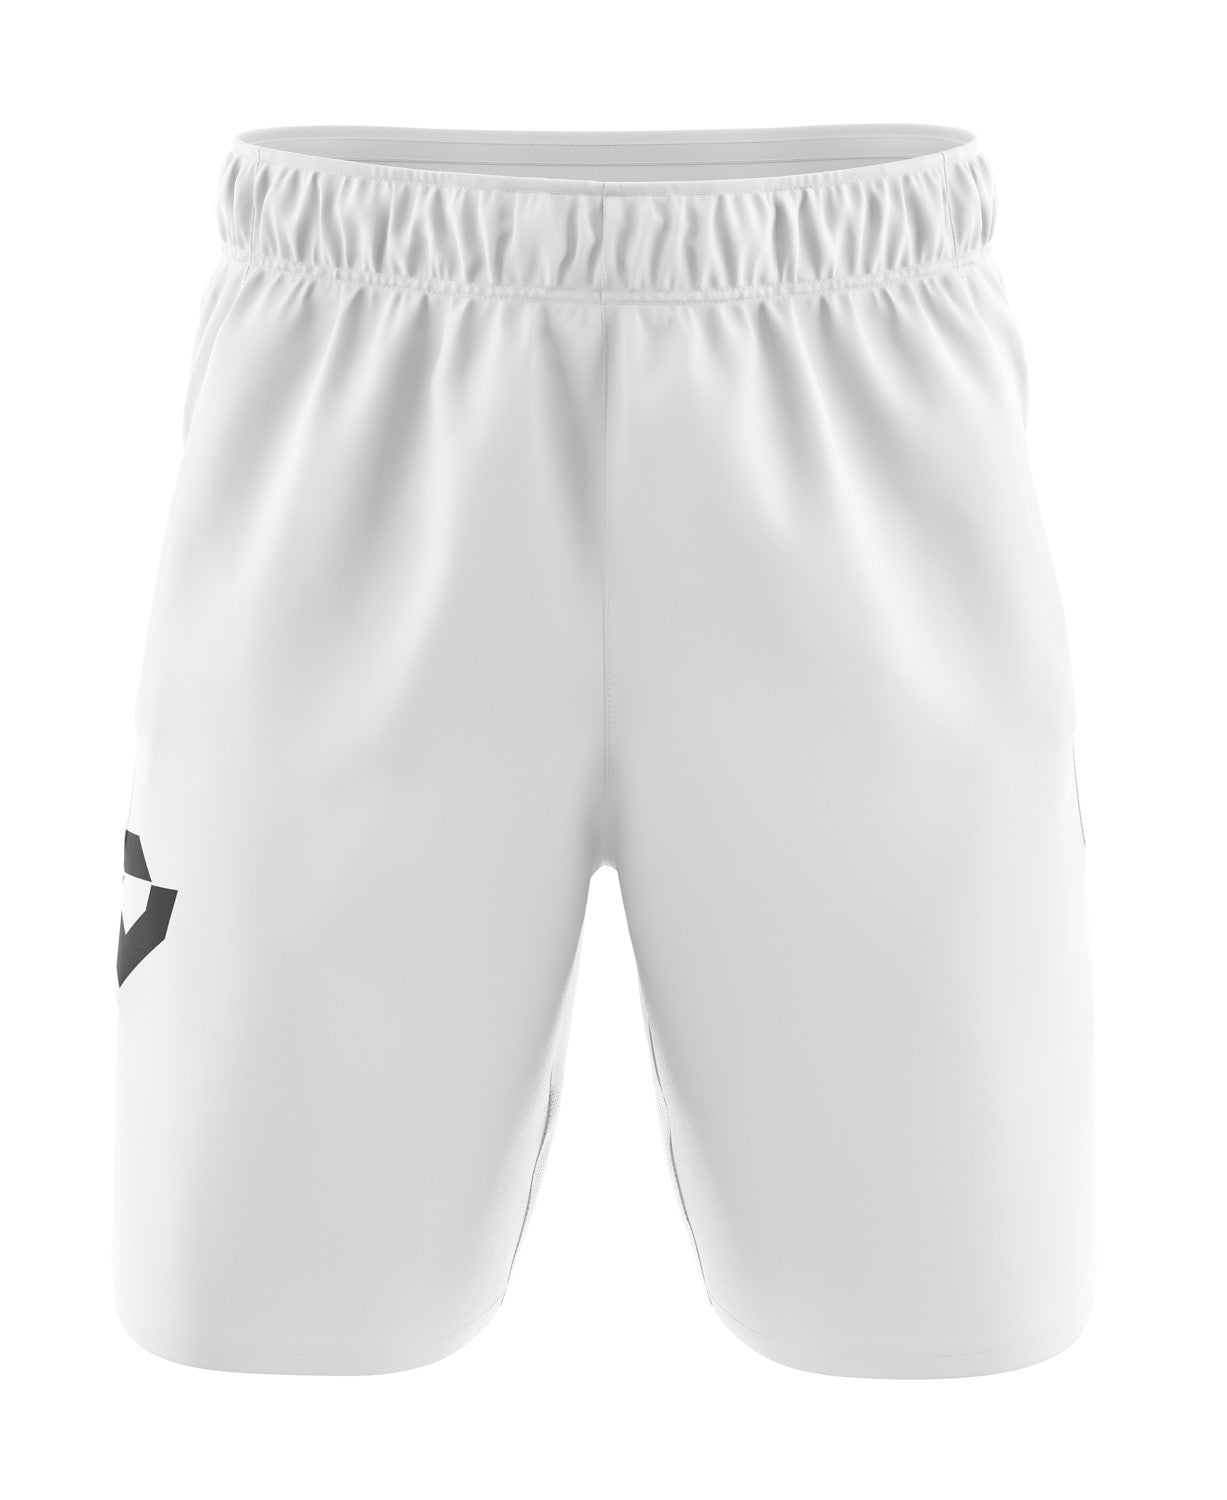 DeMarini Mens Microfiber Shorts - White